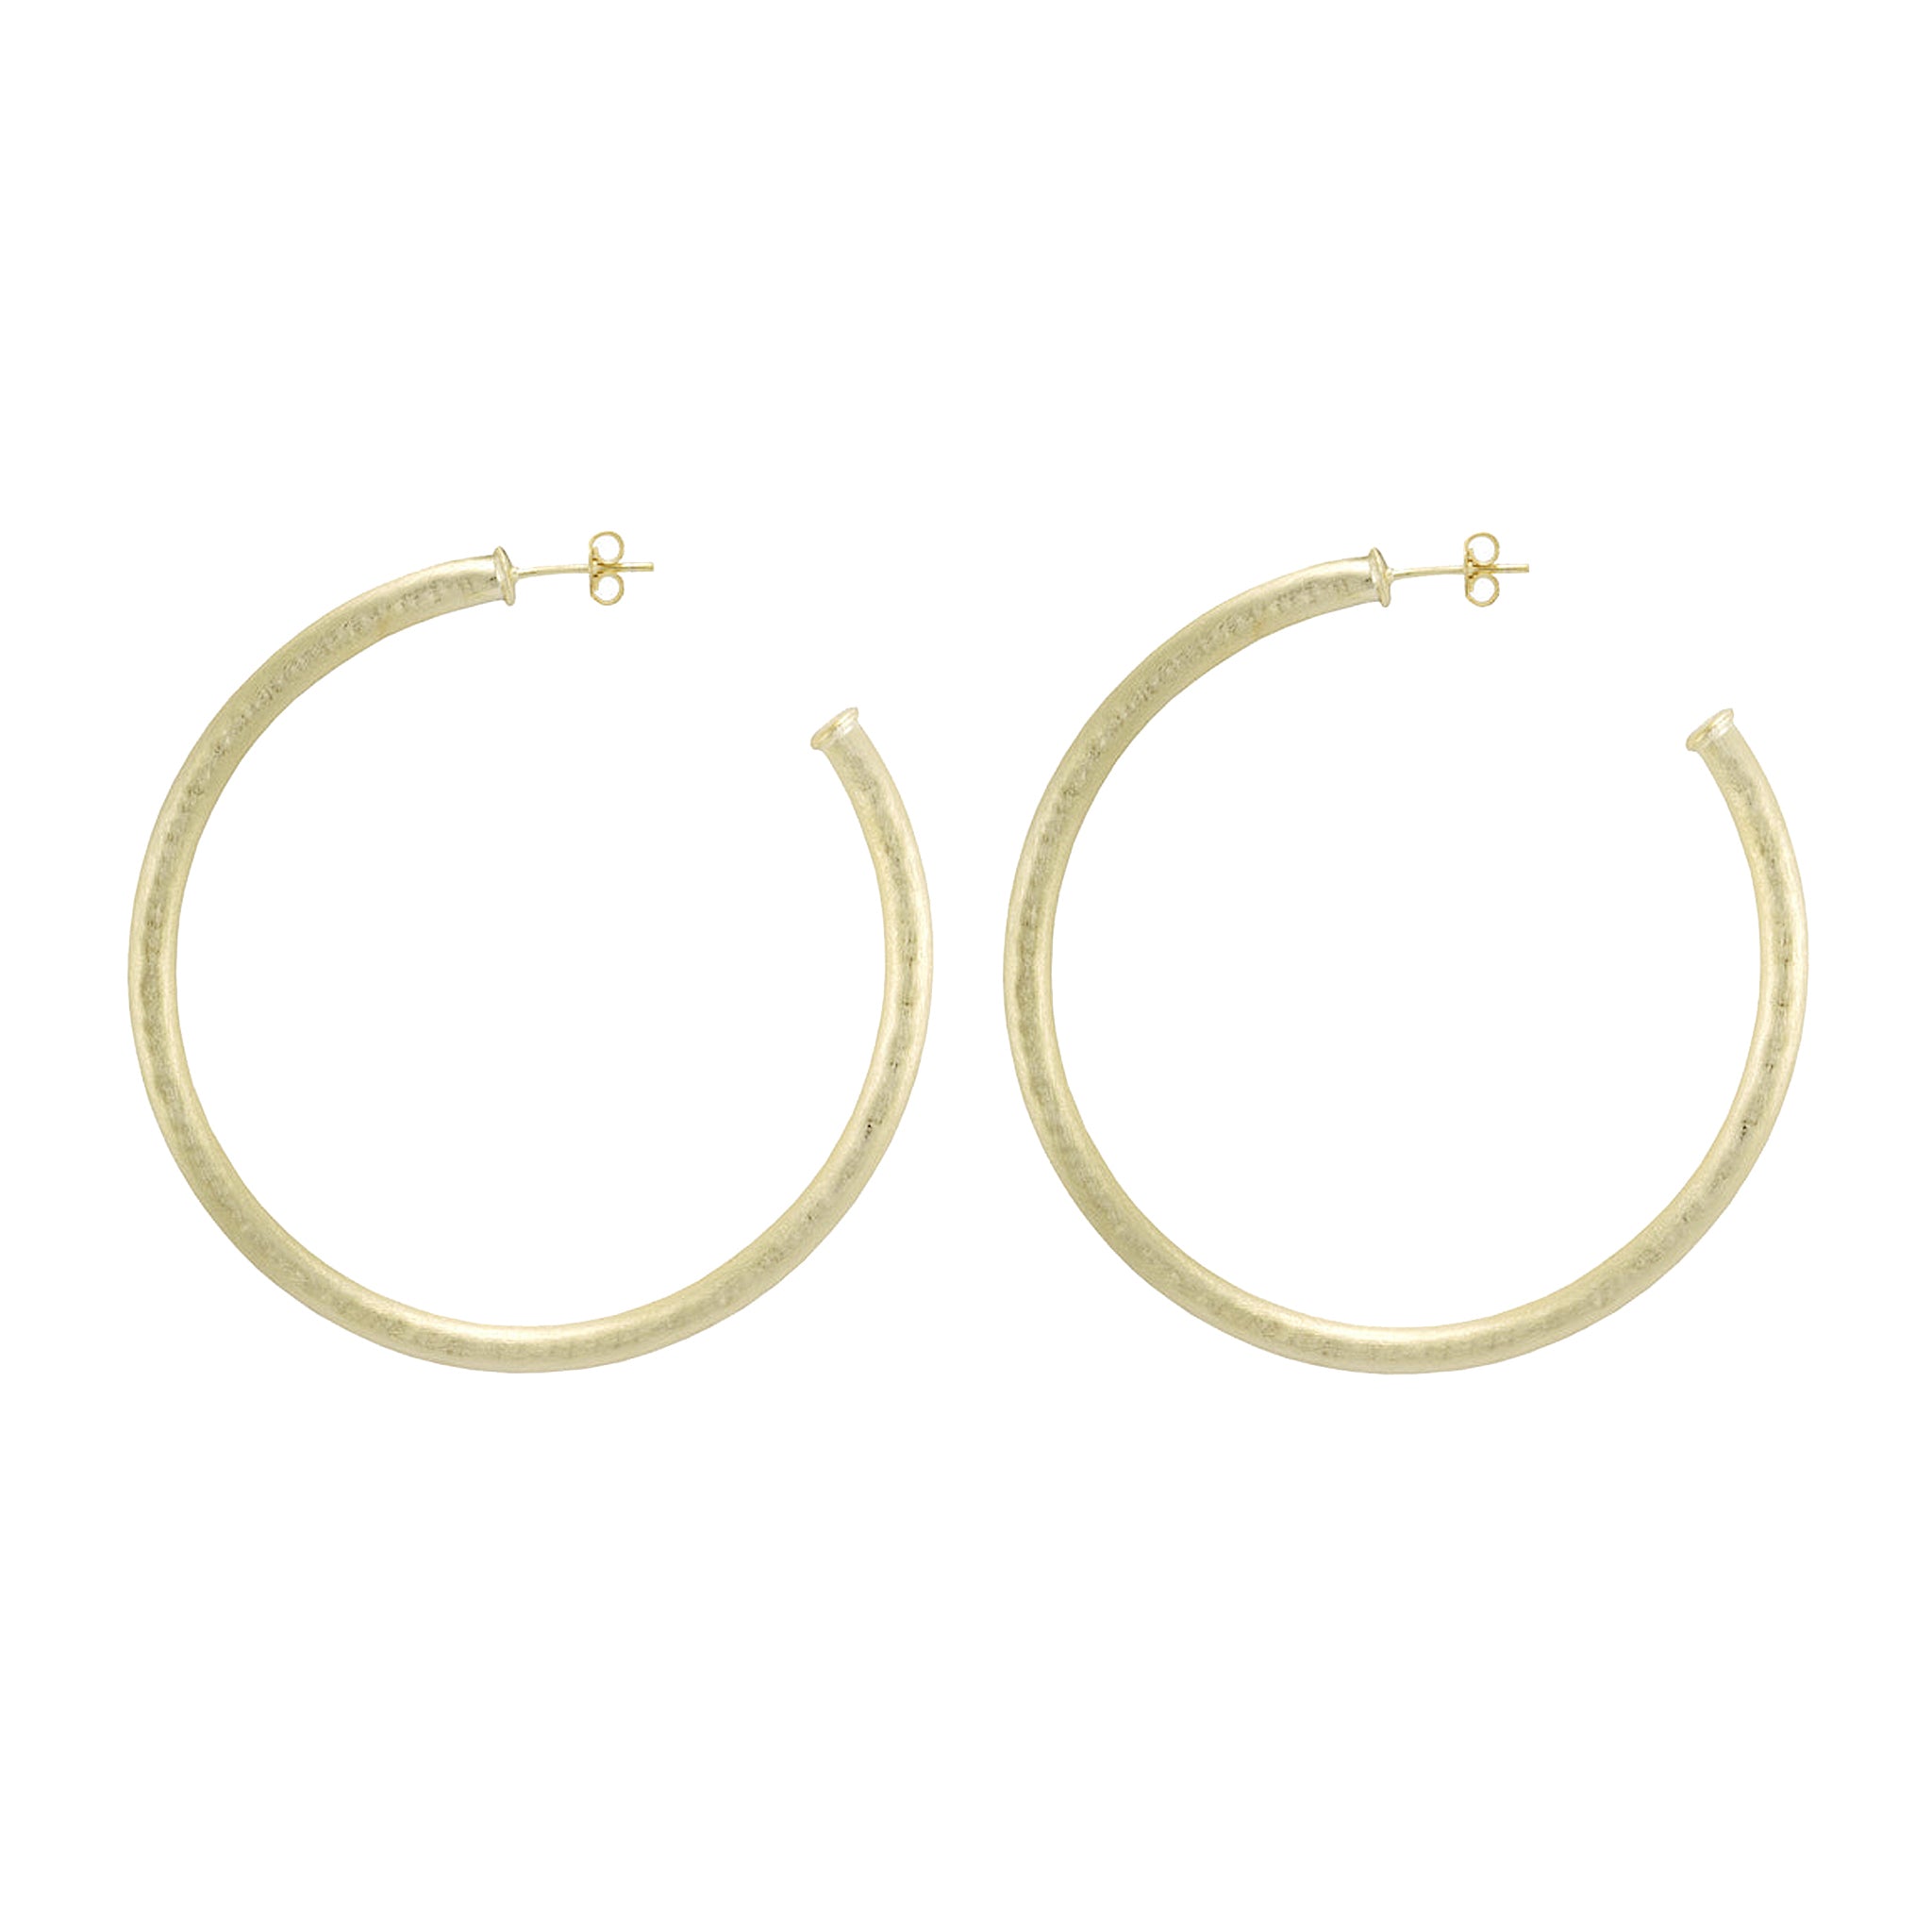 Sheila Fajl Large 2.5 Inch Everybody's Favorite Hammered Hoop Earrings in Gold